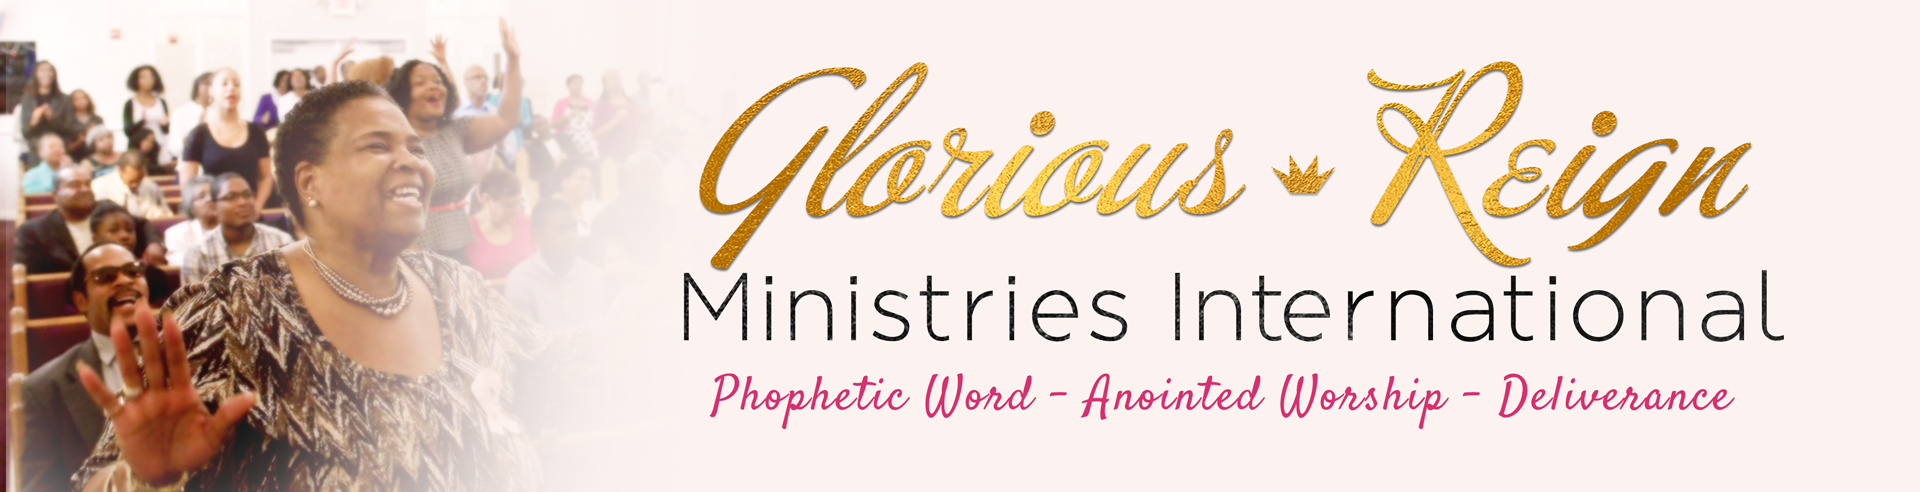 Glorious Reign Ministry International Calgary, Alberta